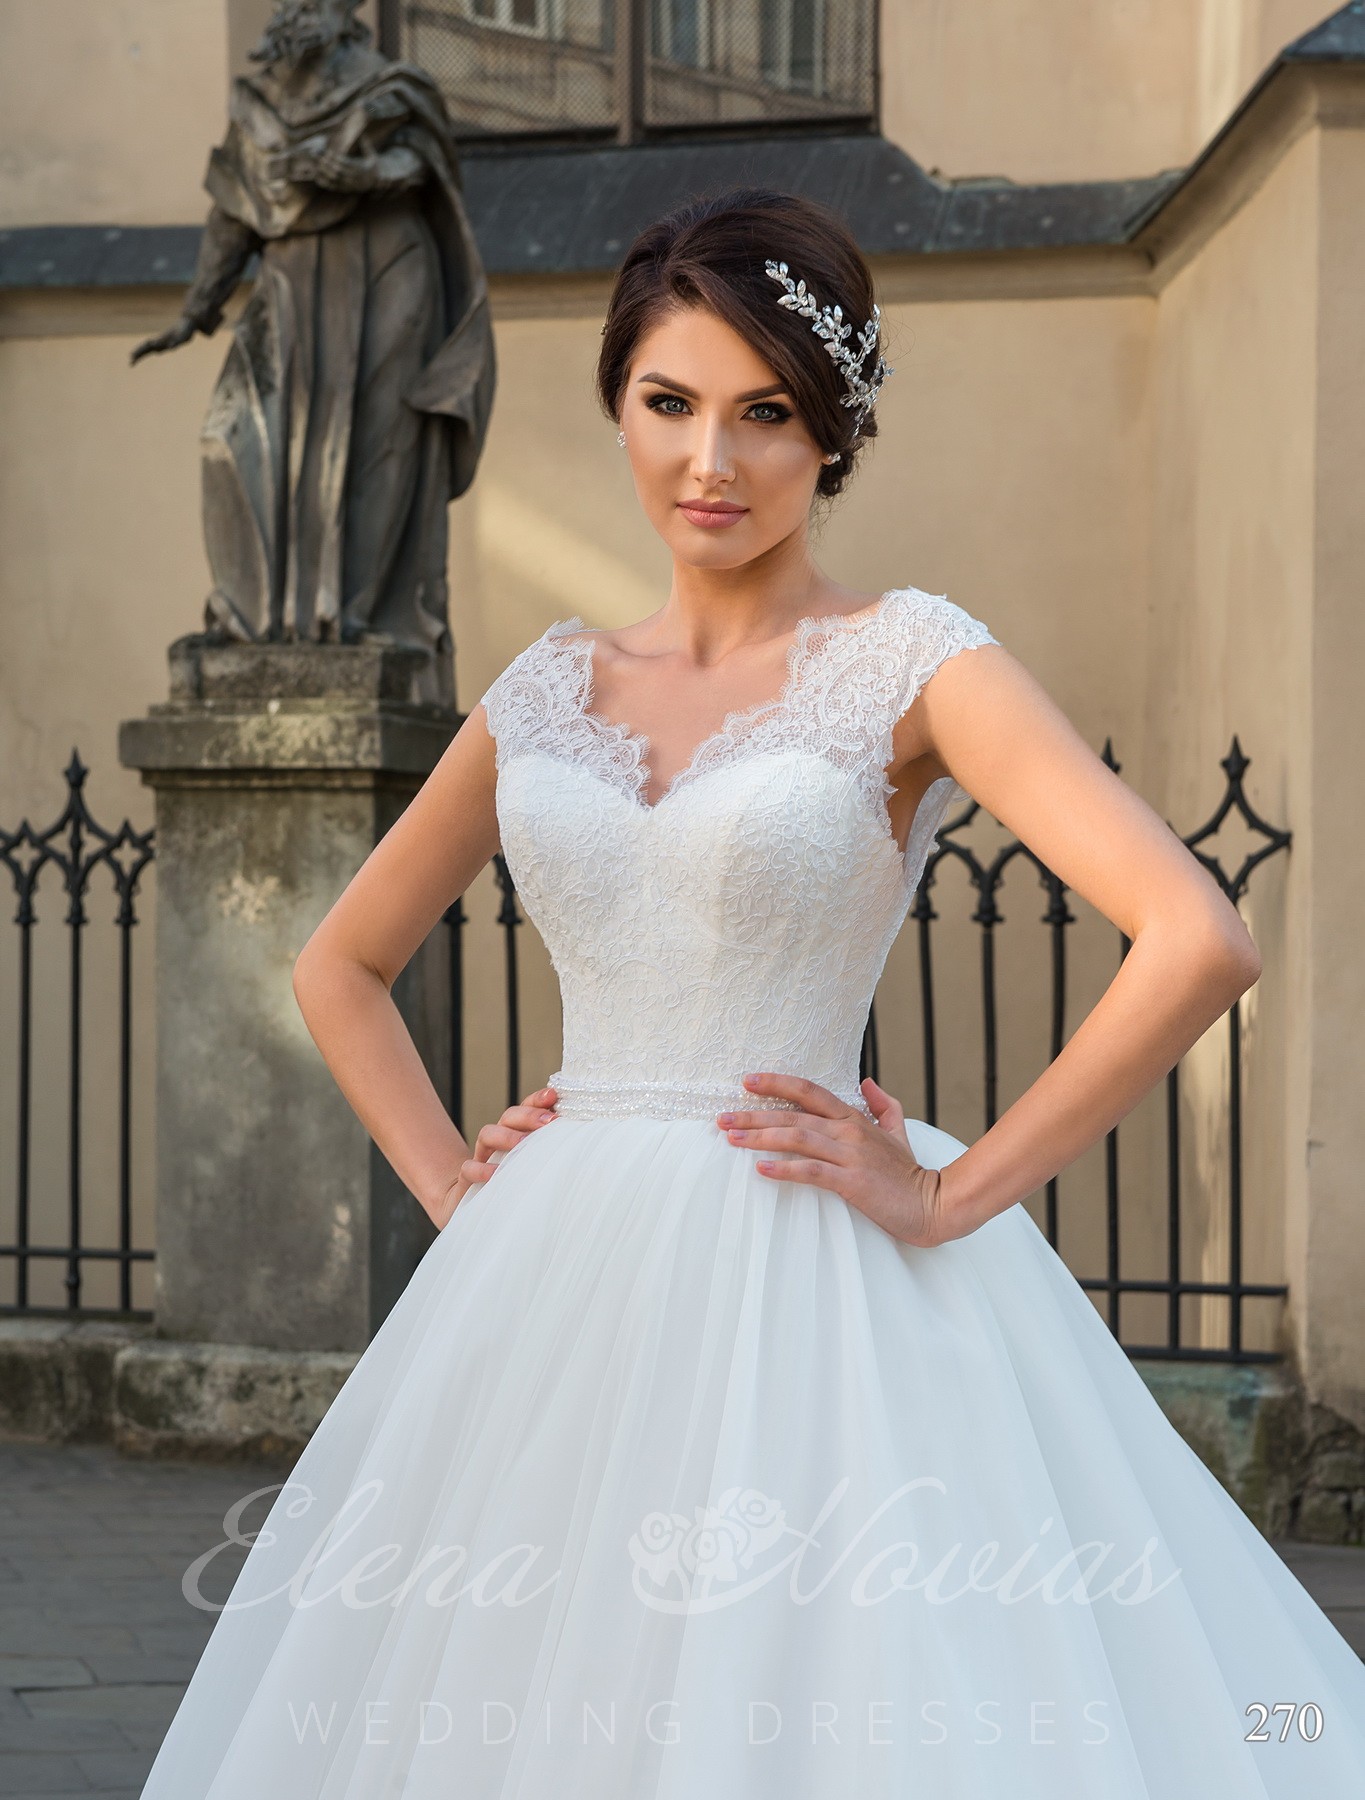 Delicate wedding dress model 270